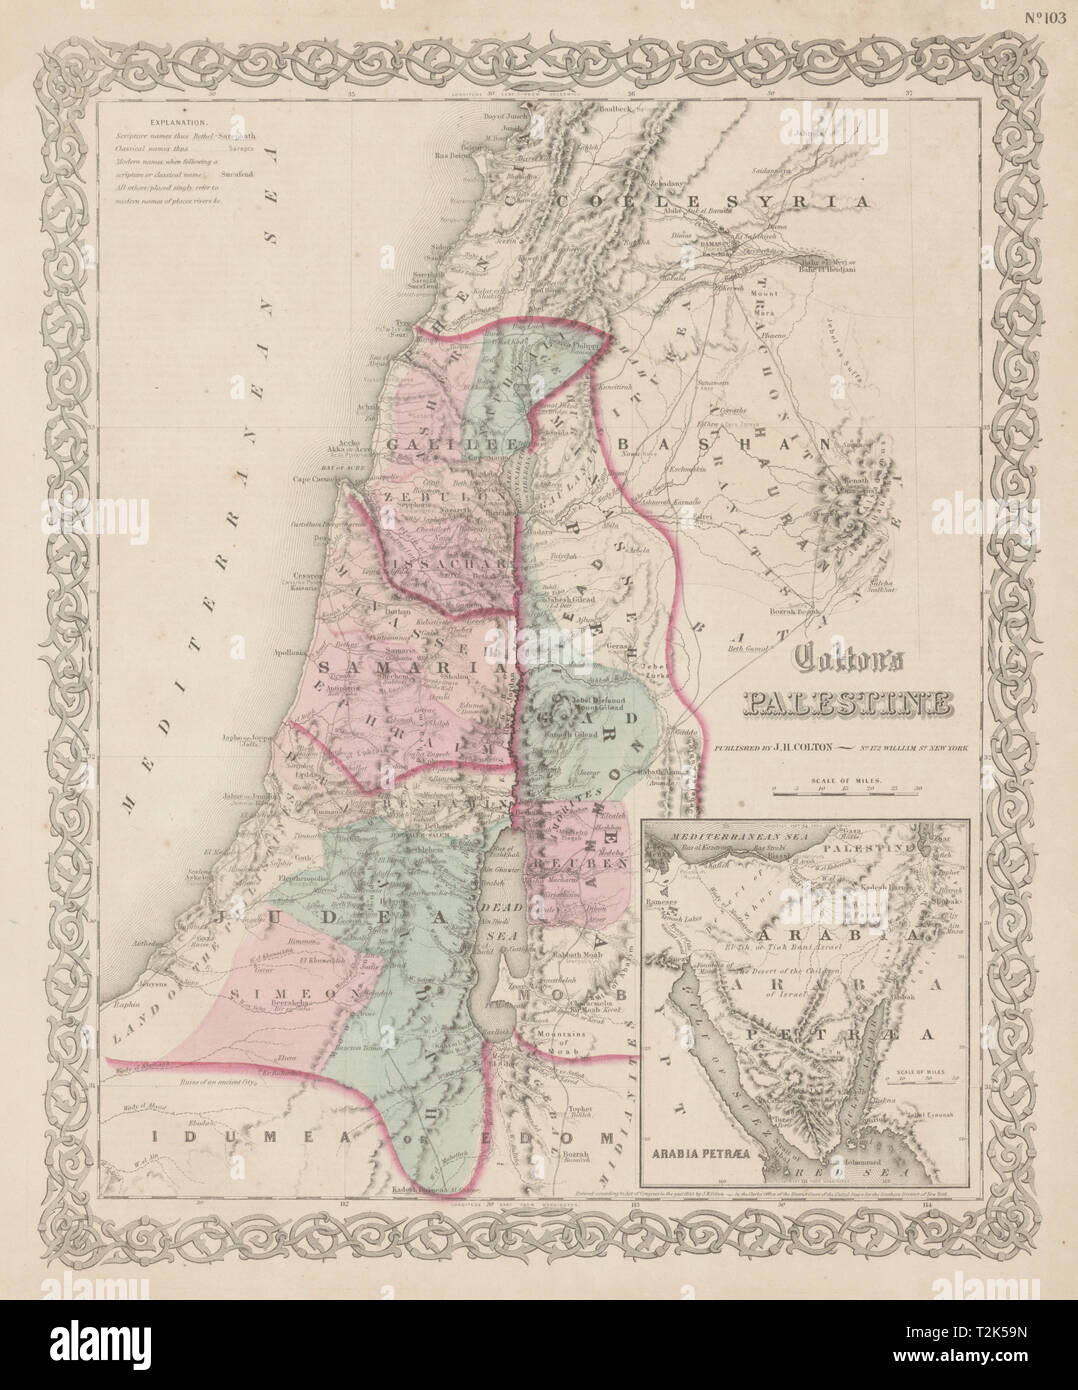 'Colton's Palestine'. Israel. Biblical classical & modern names. Sinai 1863 map Stock Photo